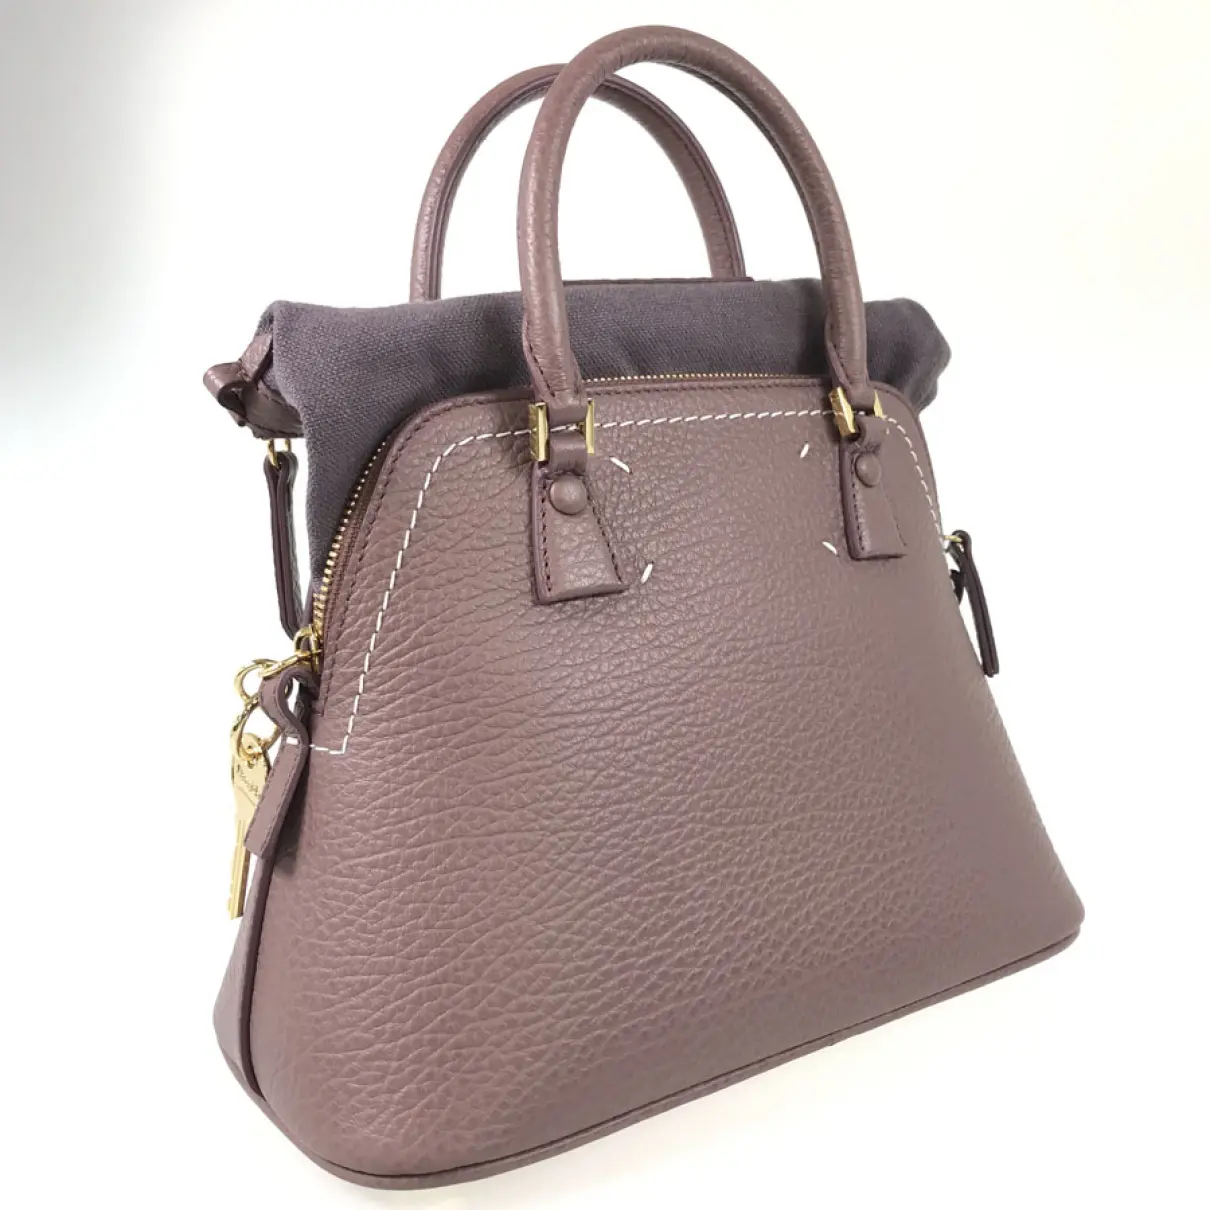 Buy Maison Martin Margiela Leather handbag online